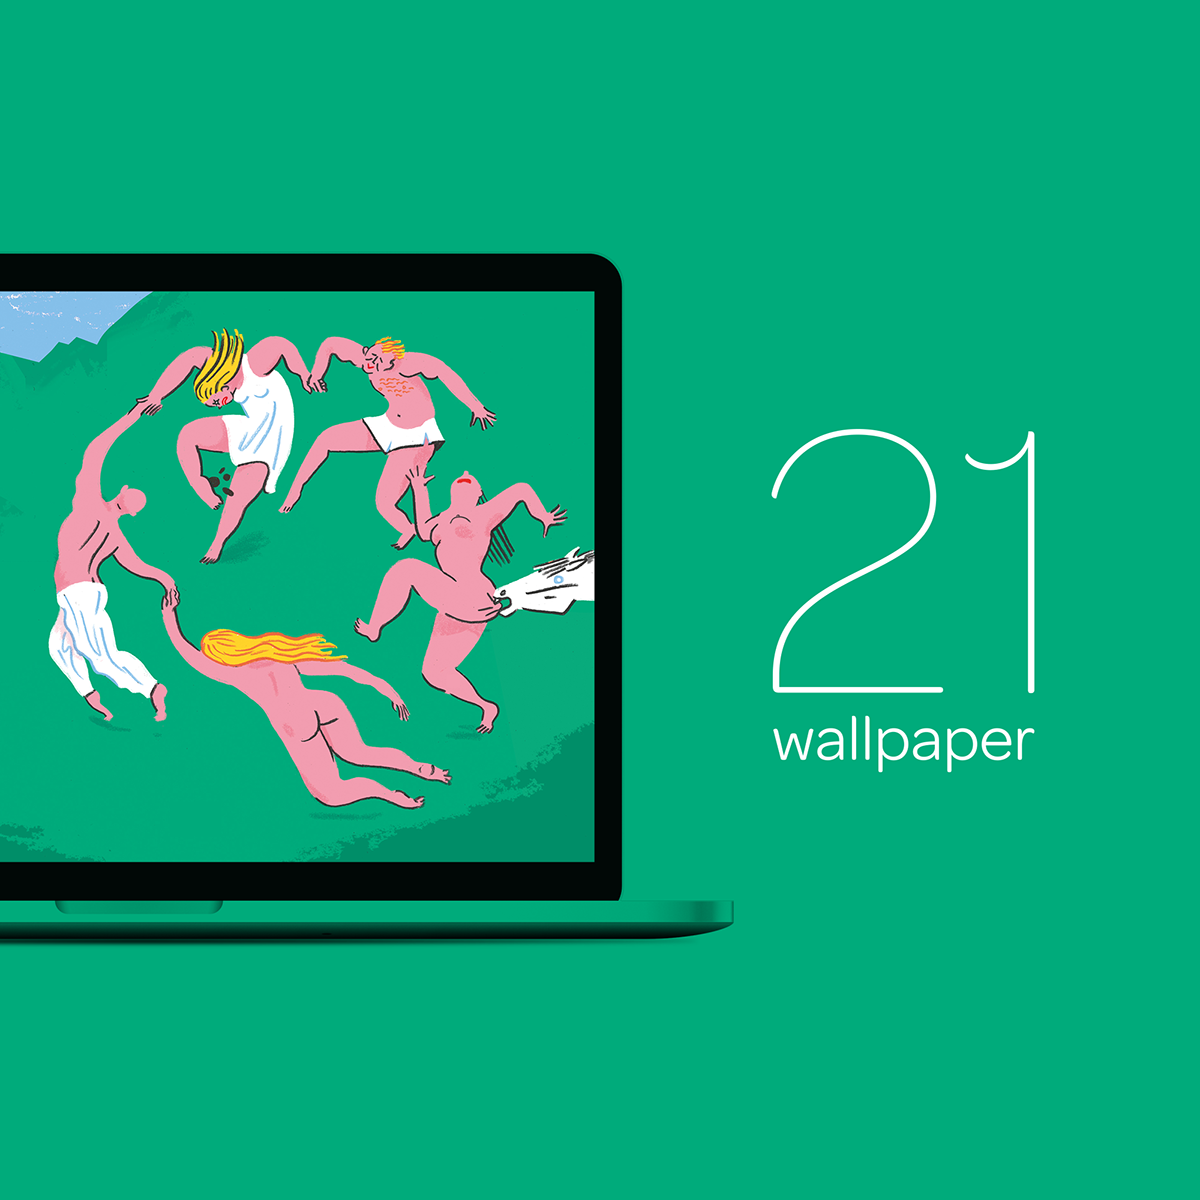 21 wallpaper wallpaper desktop ILLUSTRATION  smartphone Computer screen katiszi kati szilagyi Webdesign